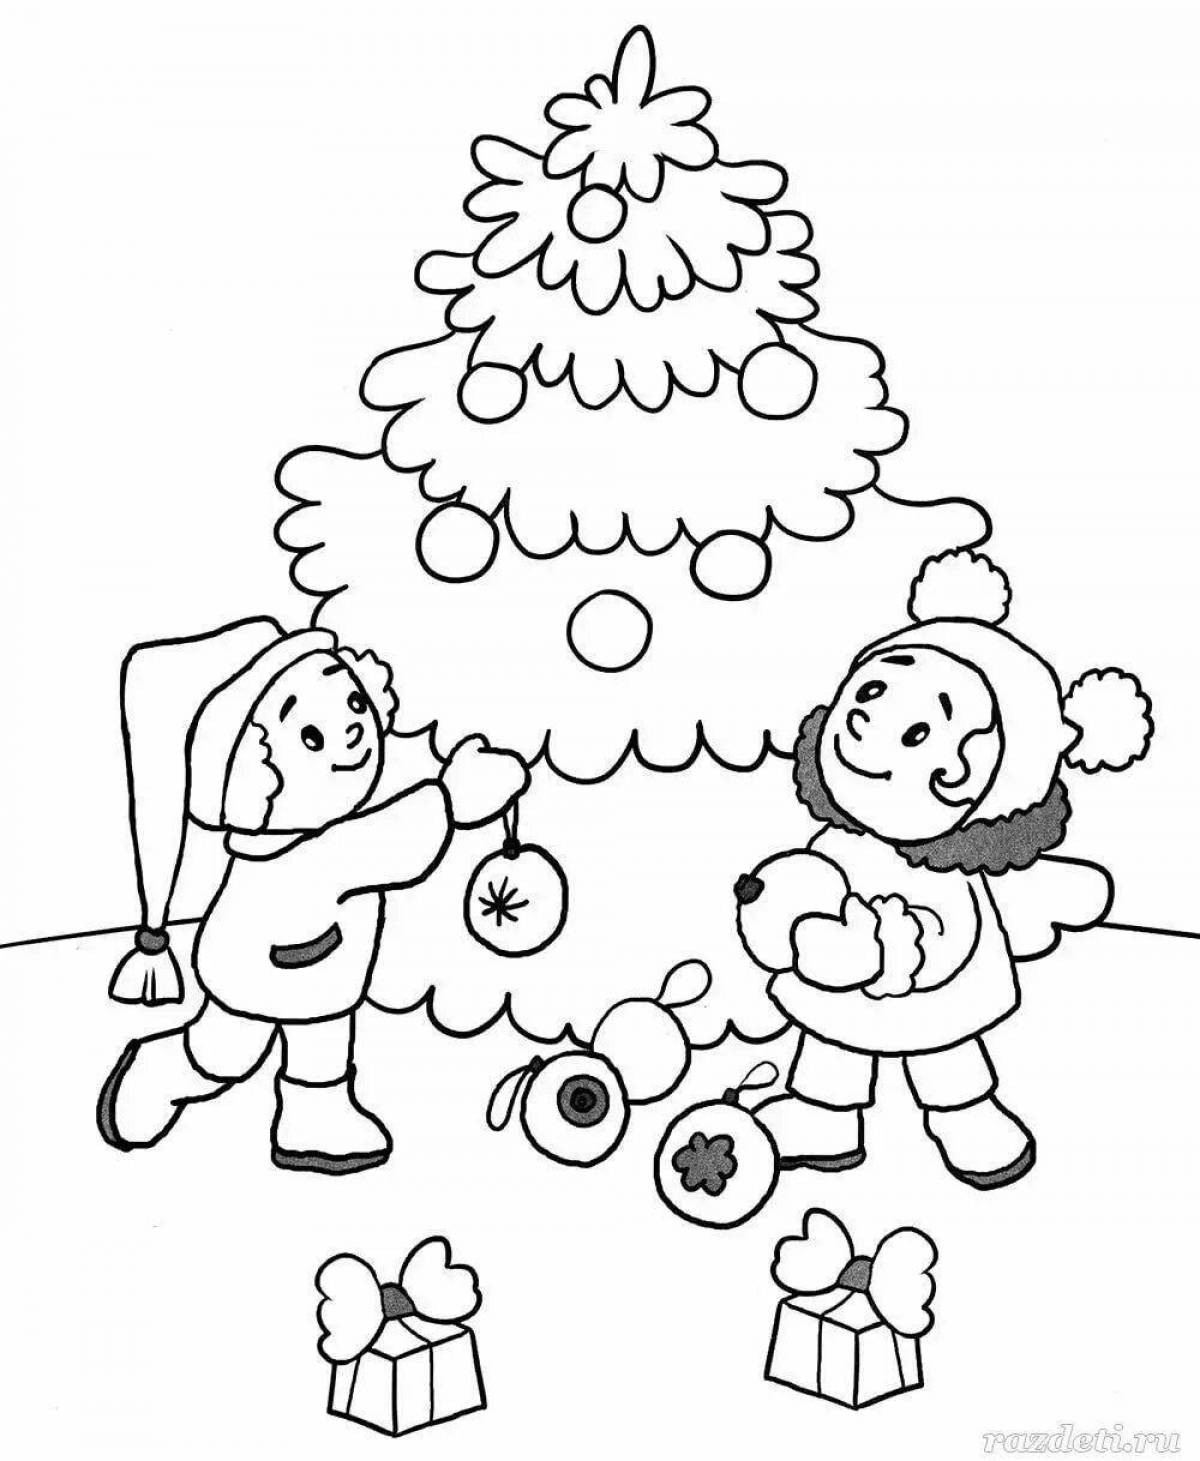 Vibrant winter coloring for preschoolers